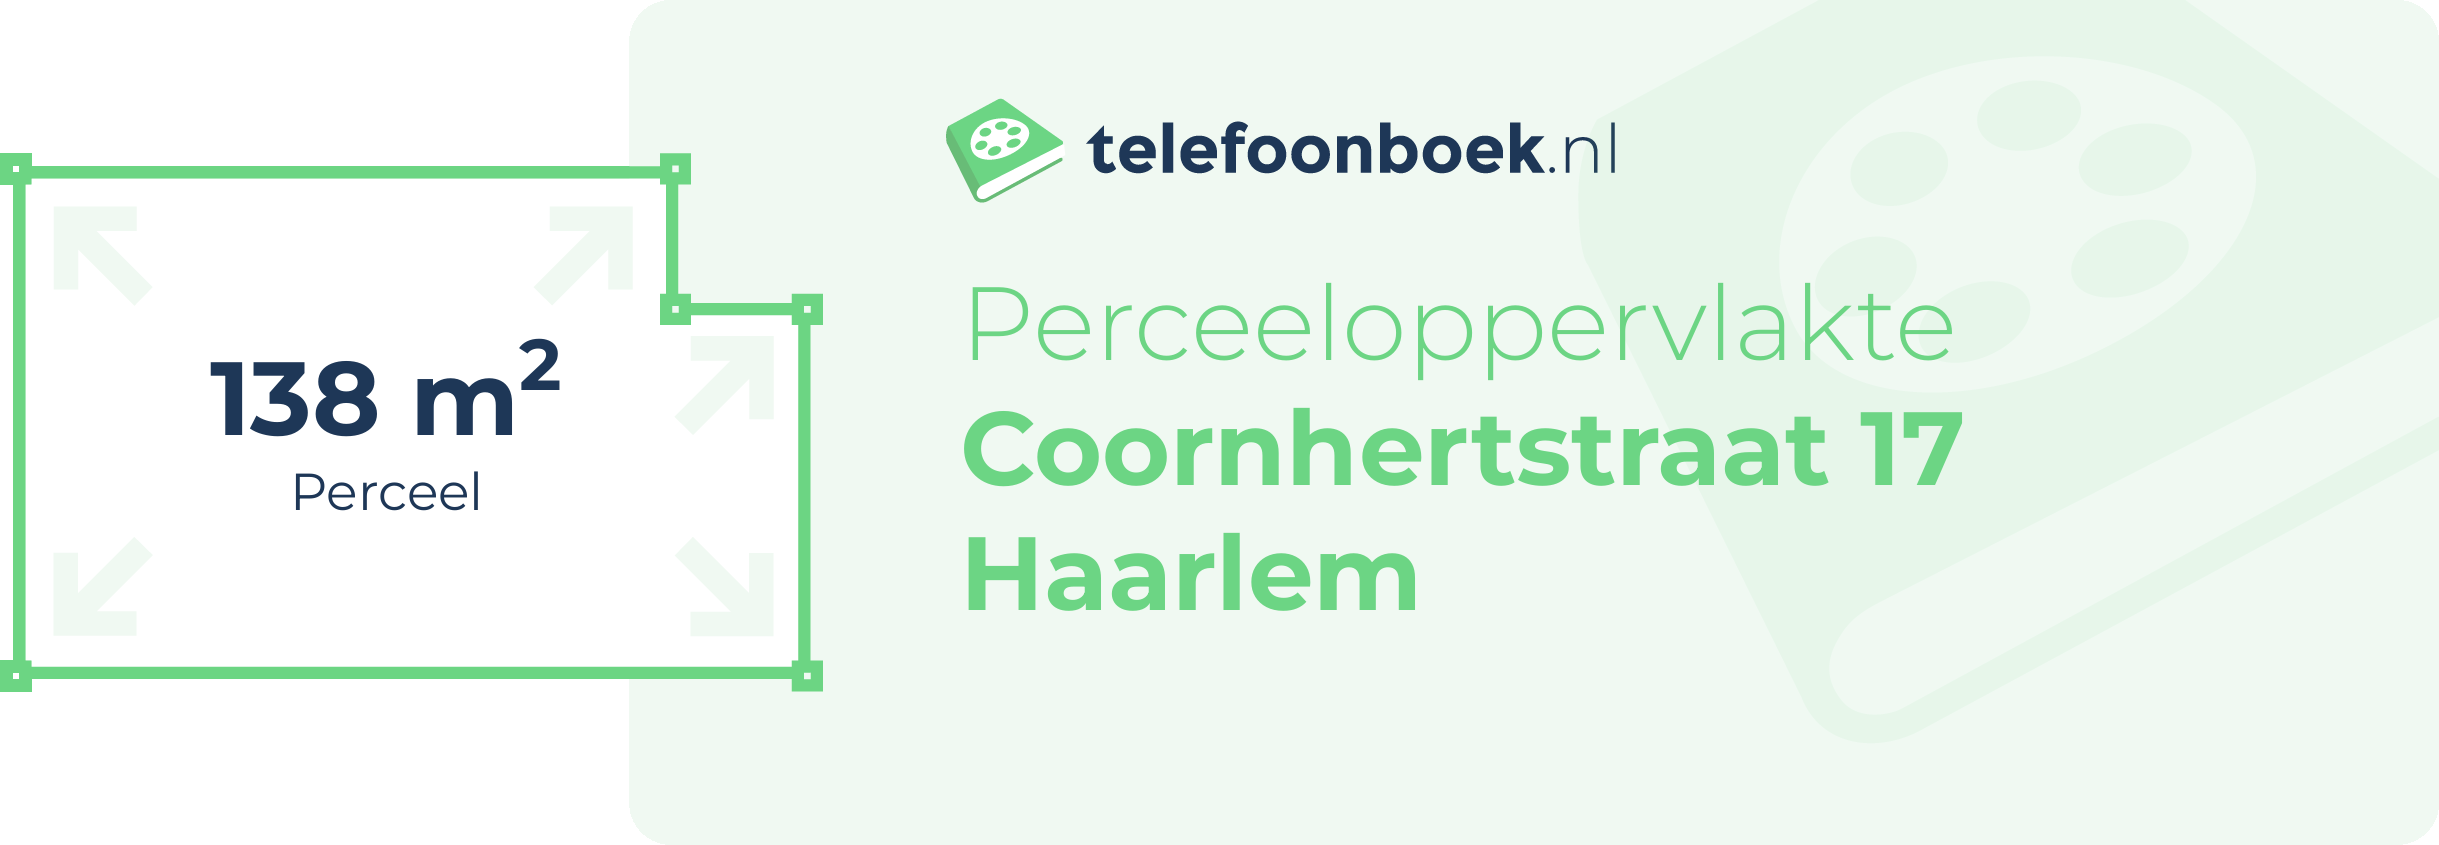 Perceeloppervlakte Coornhertstraat 17 Haarlem